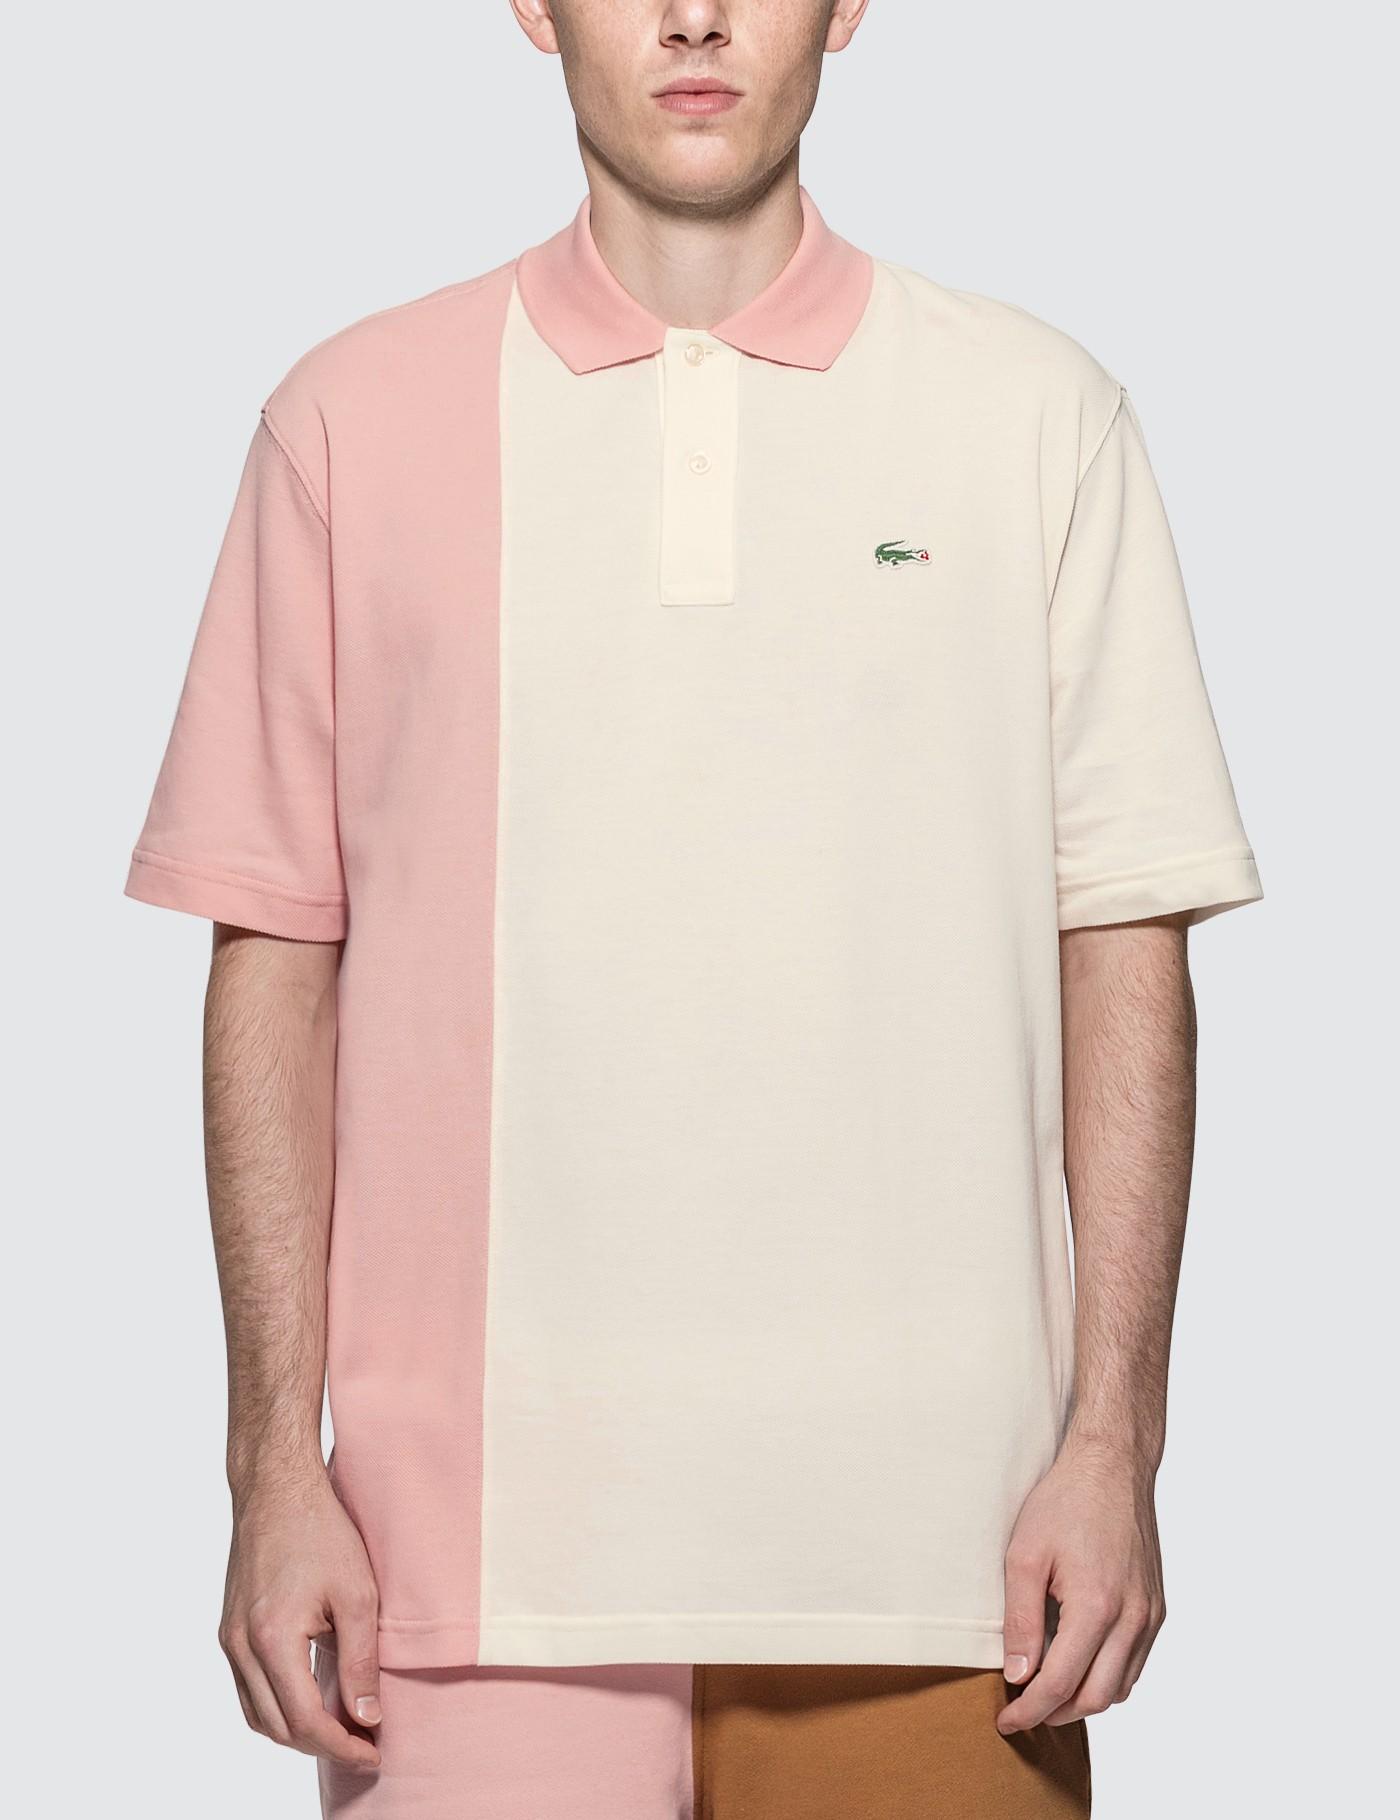 Lacoste Cotton Golf Le Fleur* X Polo in Pink for Men - Lyst